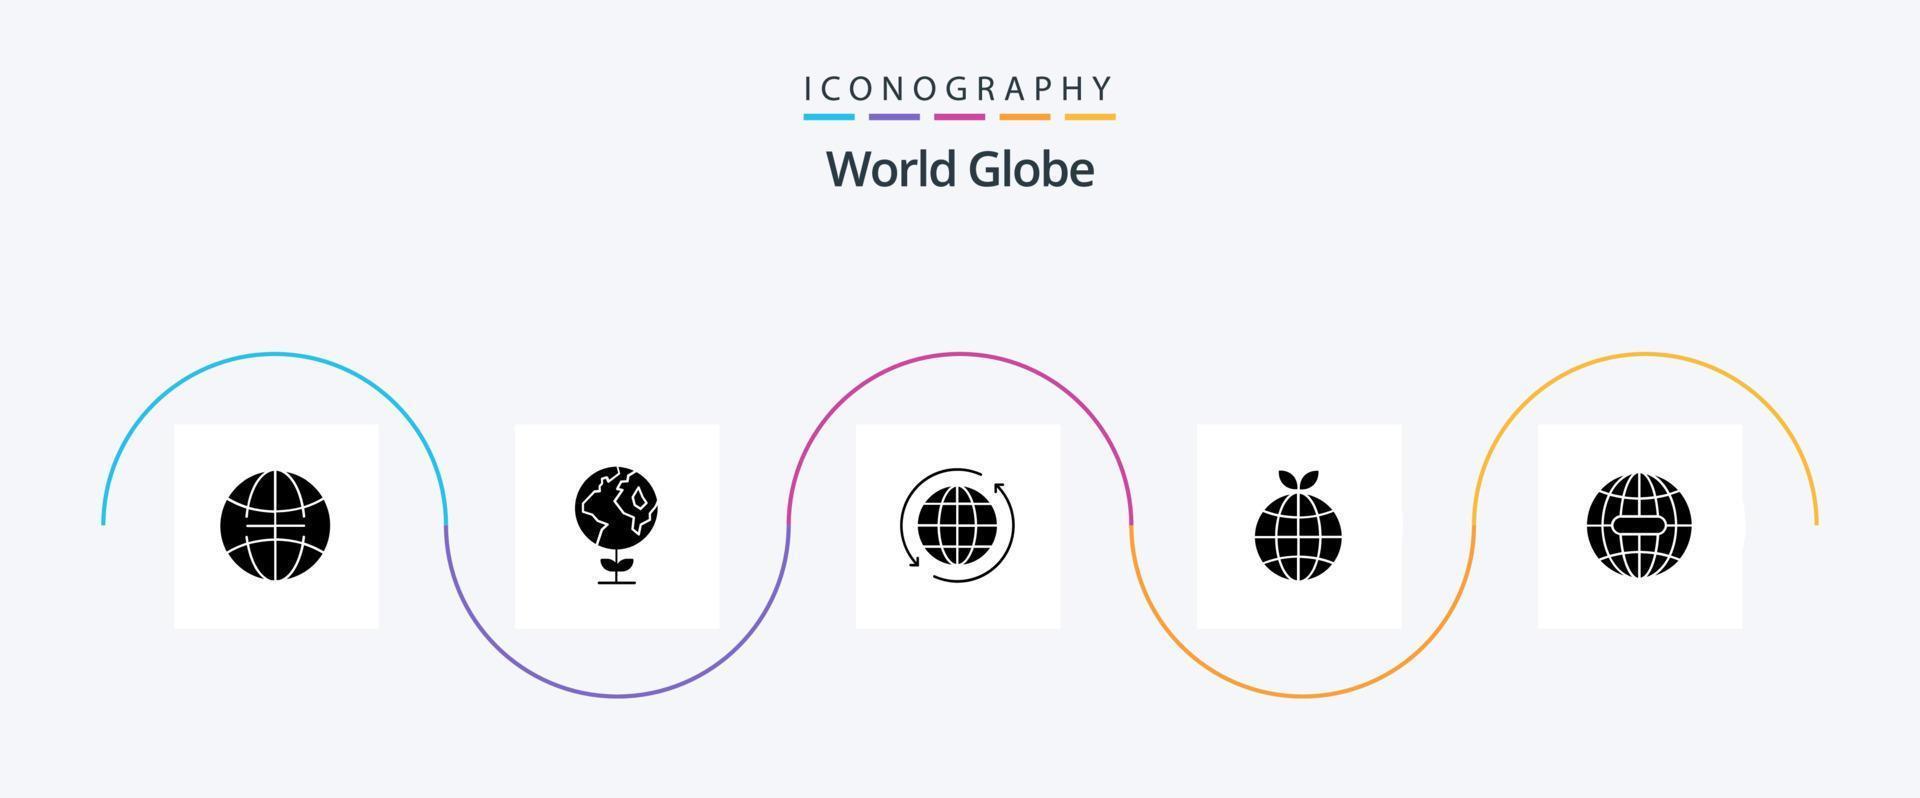 klot glyf 5 ikon packa Inklusive internet. global. internet. jorden. ekologi vektor